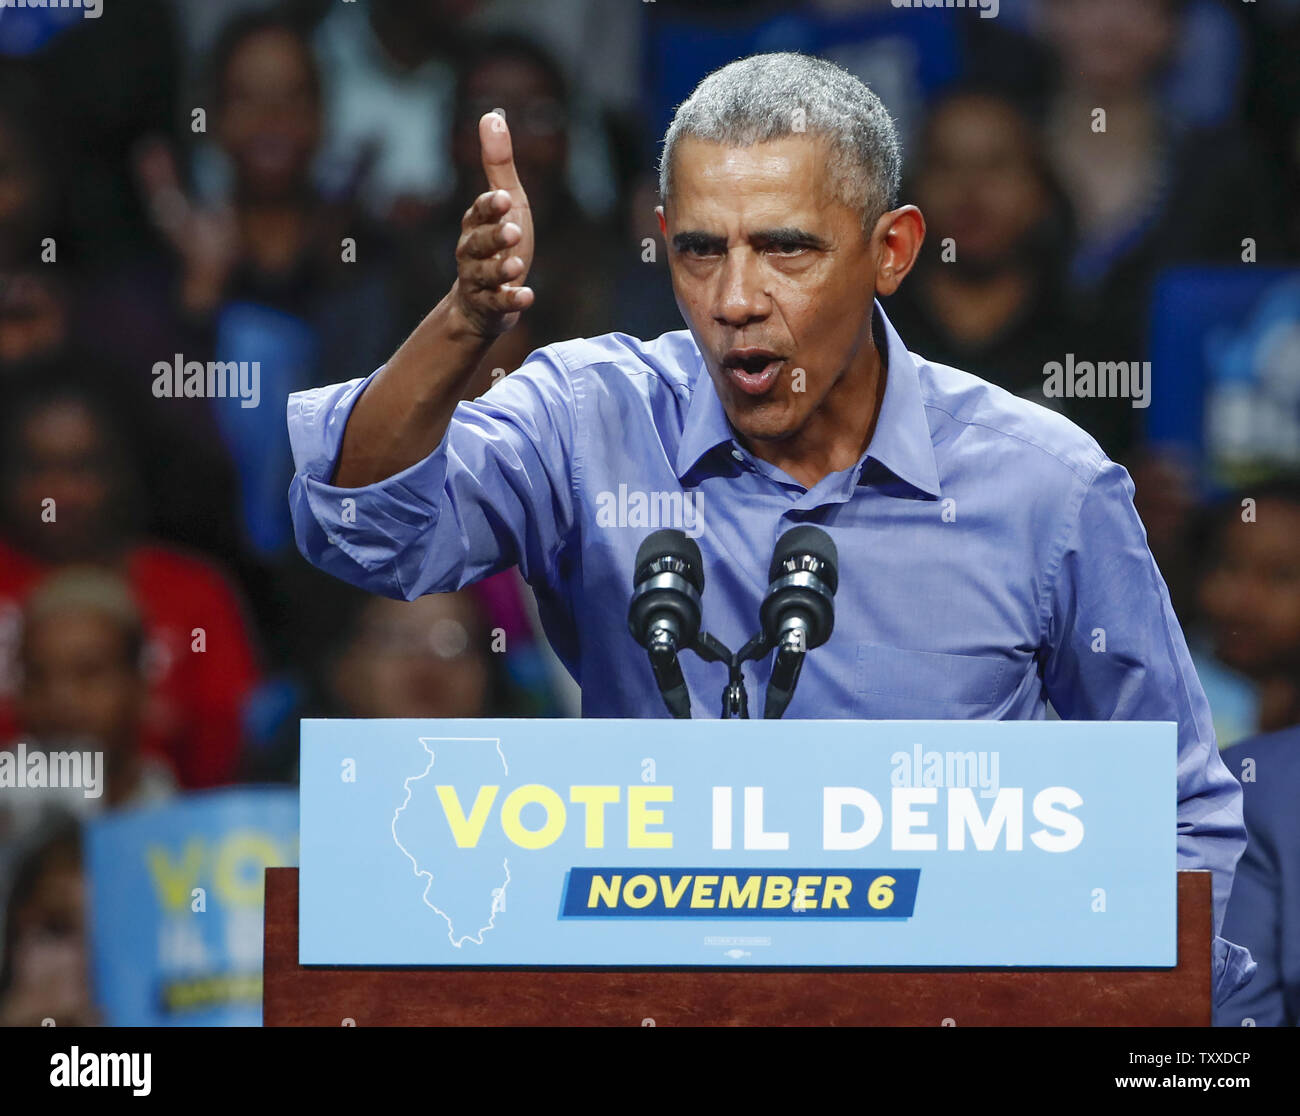 Former President Barack Obama speaks during the campaign rally for Illinois Democrats in Chicago on November 4, 2018. Photo by Kamil Krzaczynski/UPI Stock Photo